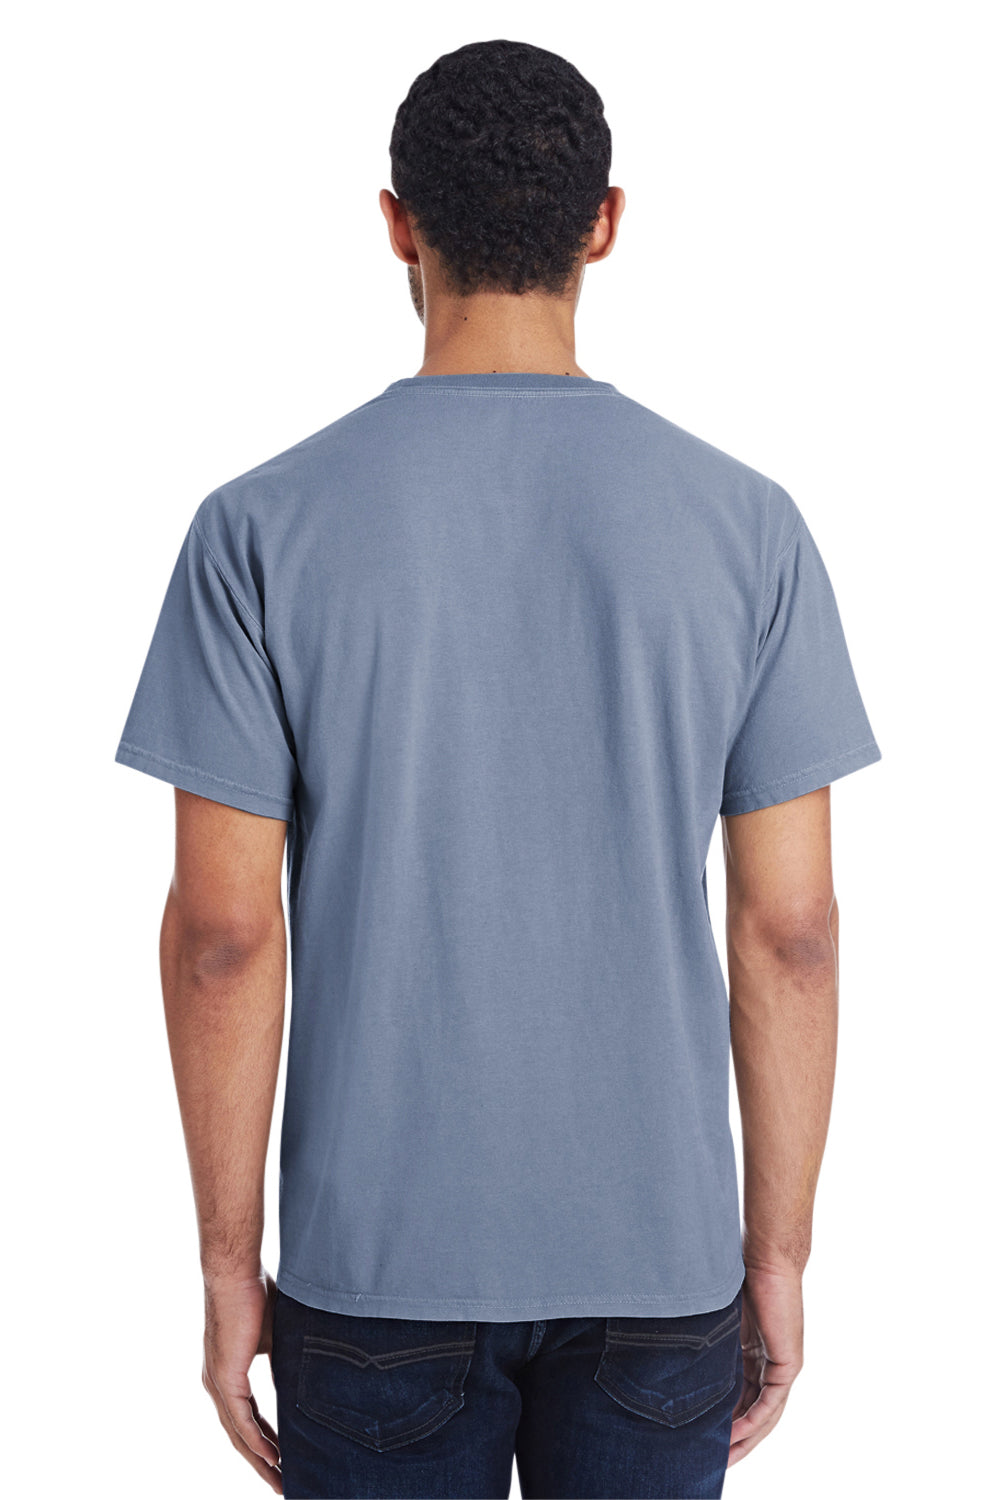 ComfortWash by Hanes GDH150 Short Sleeve Crewneck T-Shirt w/ Pocket Saltwater Blue Back